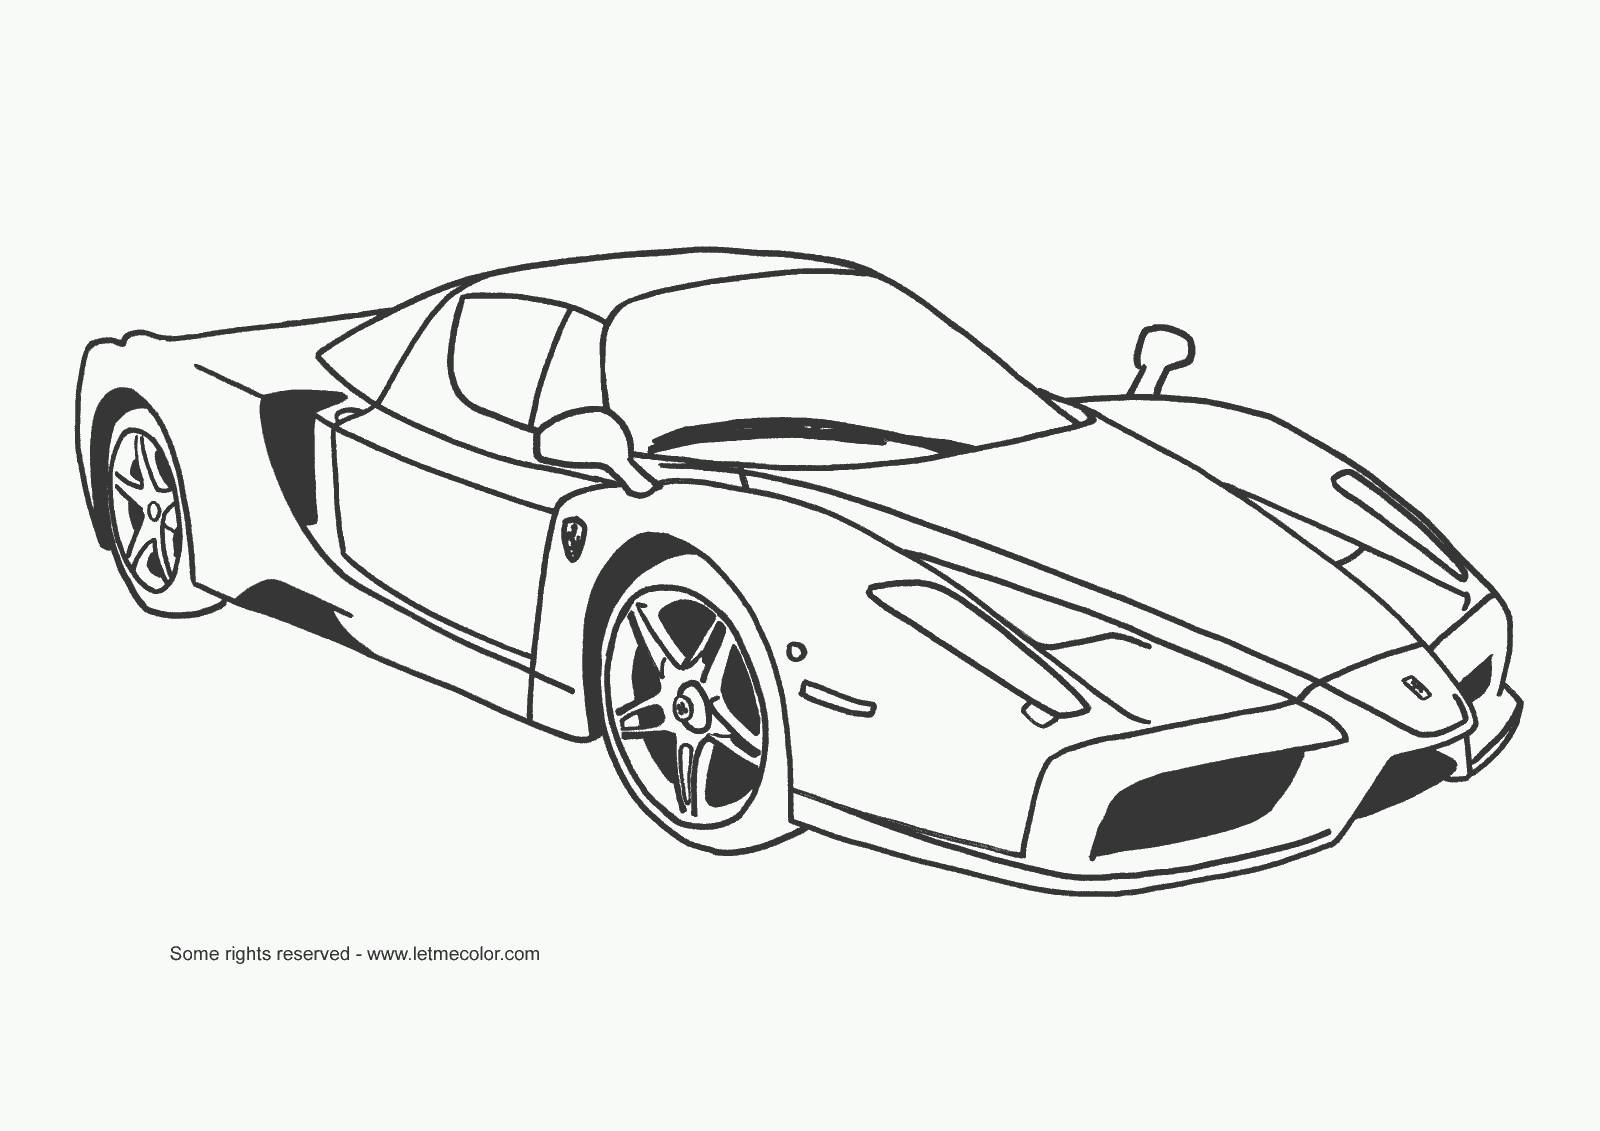 Grand Theft Auto V coloring pages - Grand Theft Auto - Ferrari Enzo